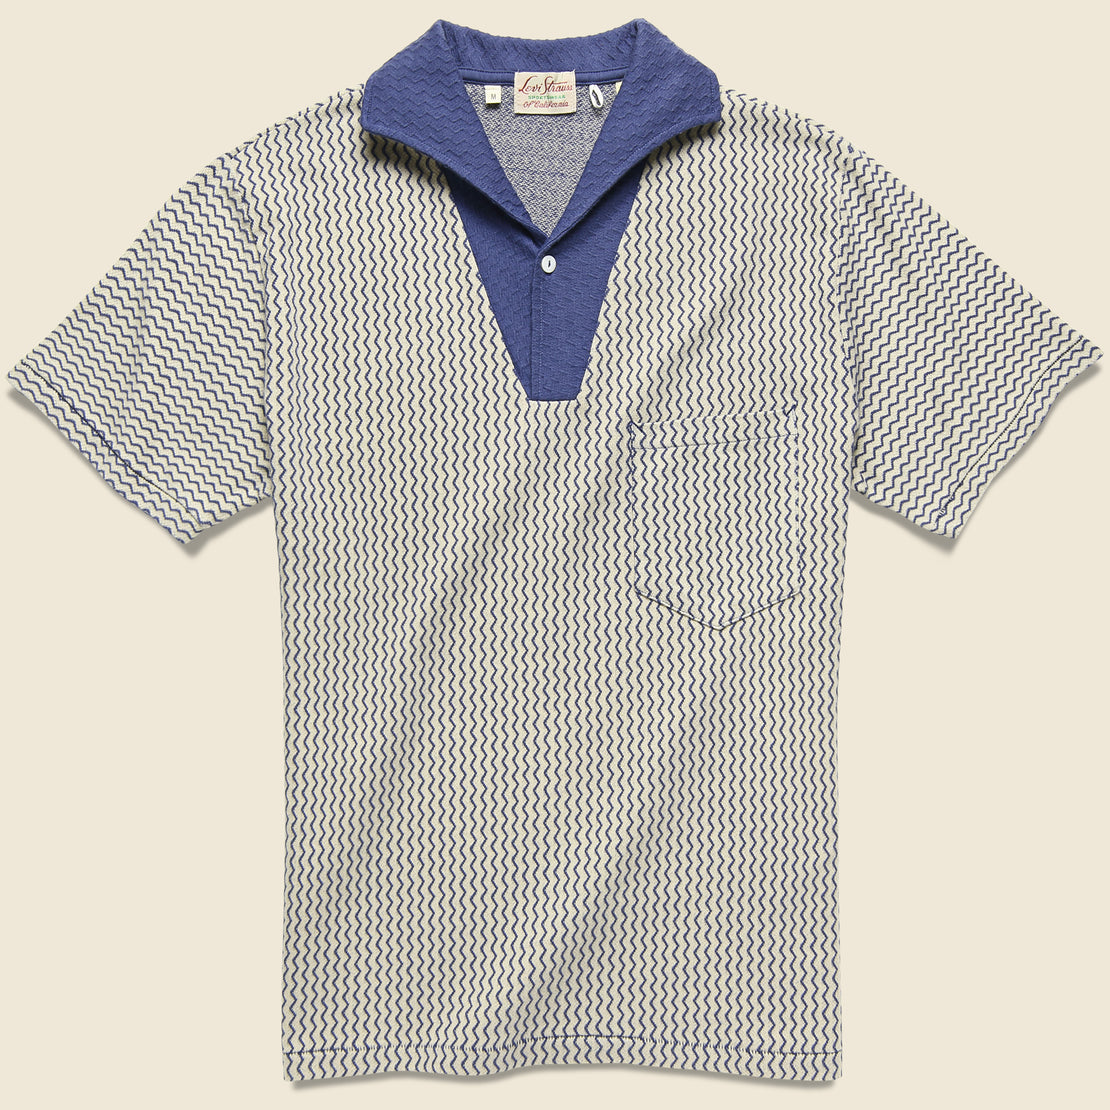 Levis Vintage Clothing 1950s Polo Shirt - Zig Zag Cobalt